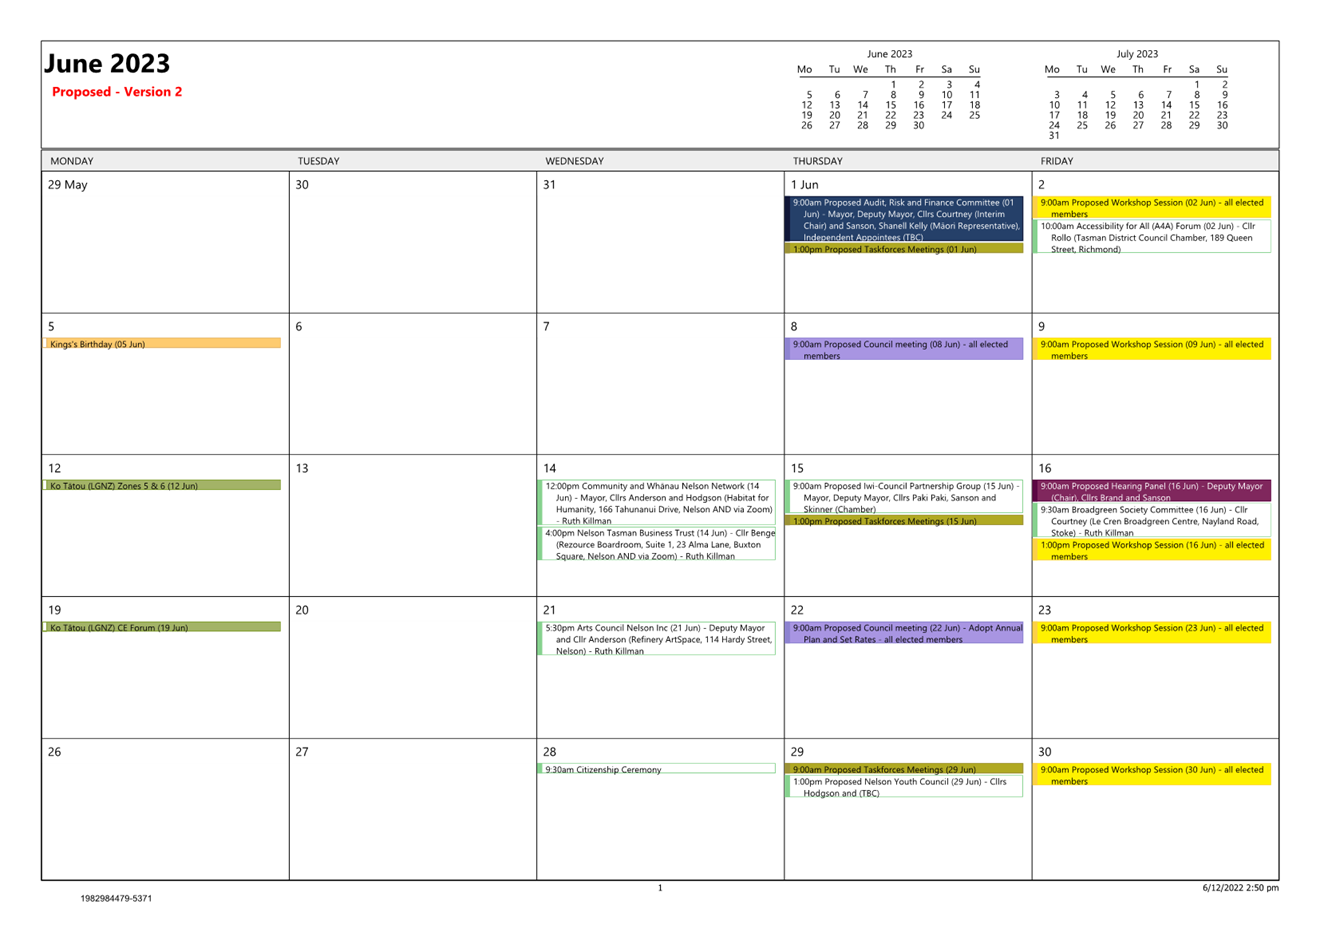 Table, calendar

Description automatically generated with medium confidence